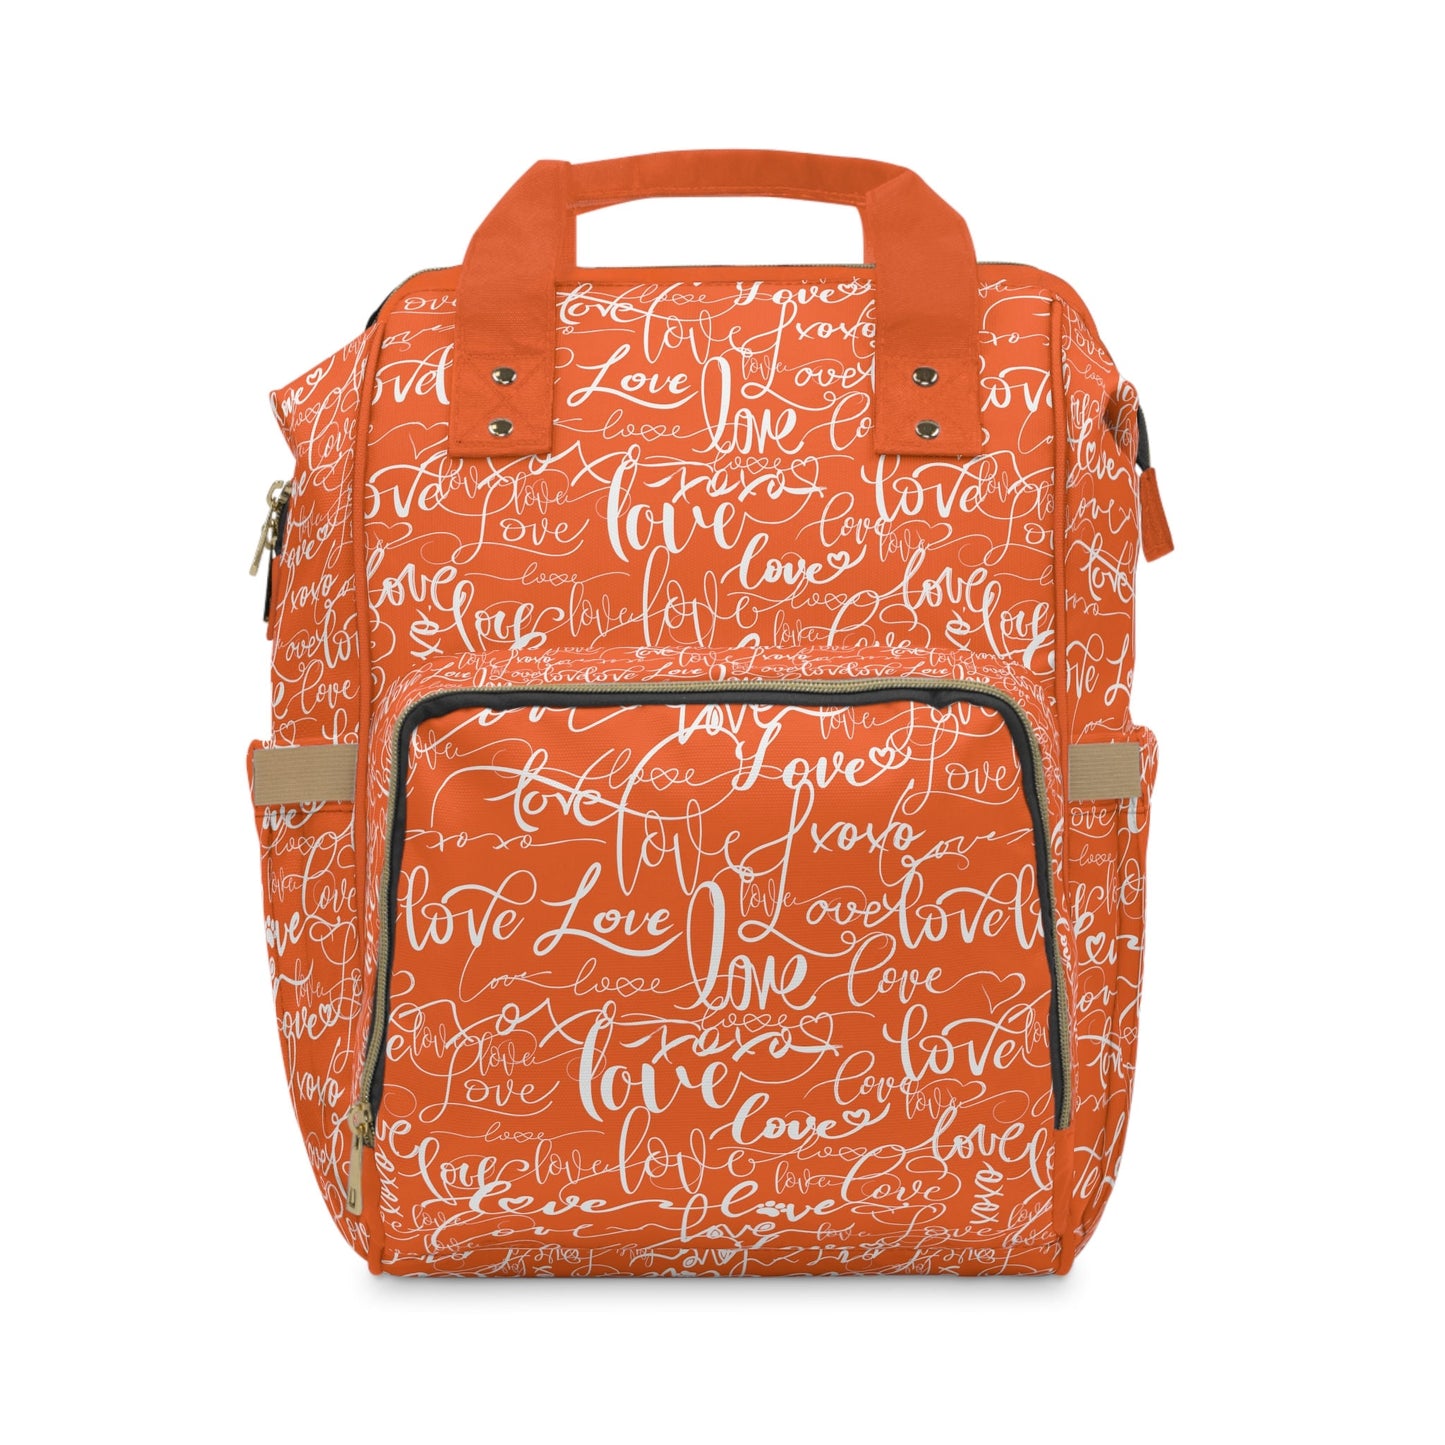 Unique Stylish Backpack Diaper Bag/Love All Over Print/Unique Elegant Design/ Woman&#39;s Weekend Bag/Multifunctional Diaper Bag/Orange and Grey